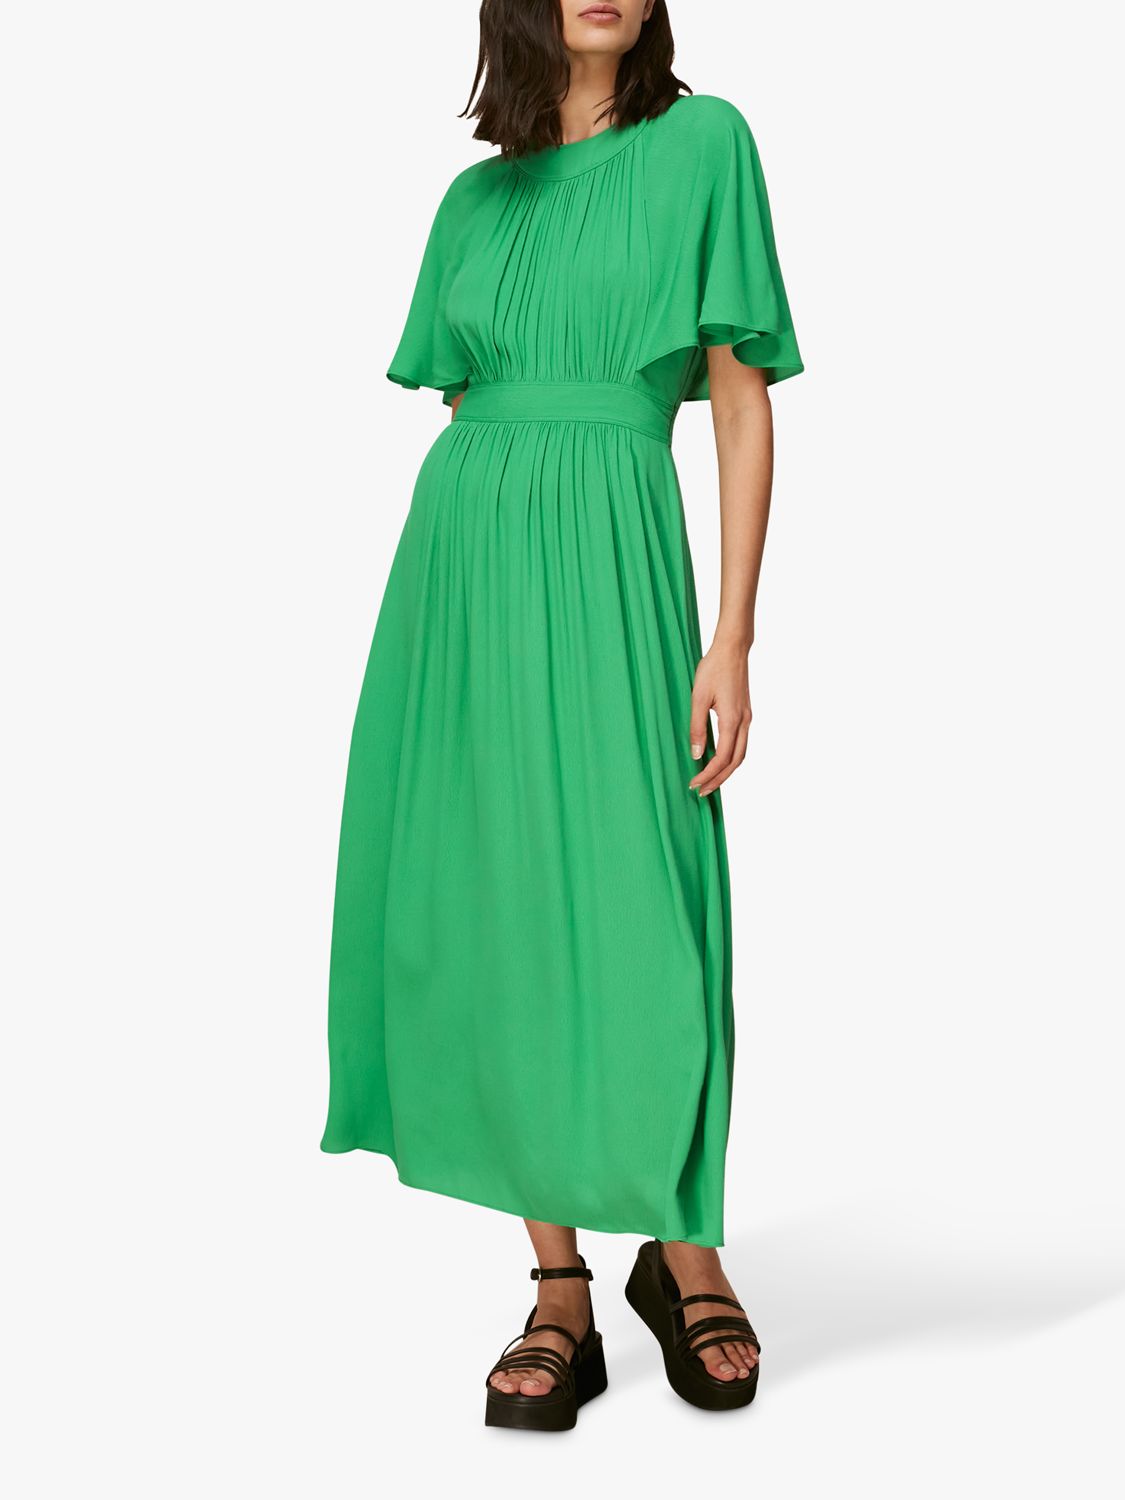 Whistles Amelia Cape Dress, Green at John Lewis & Partners